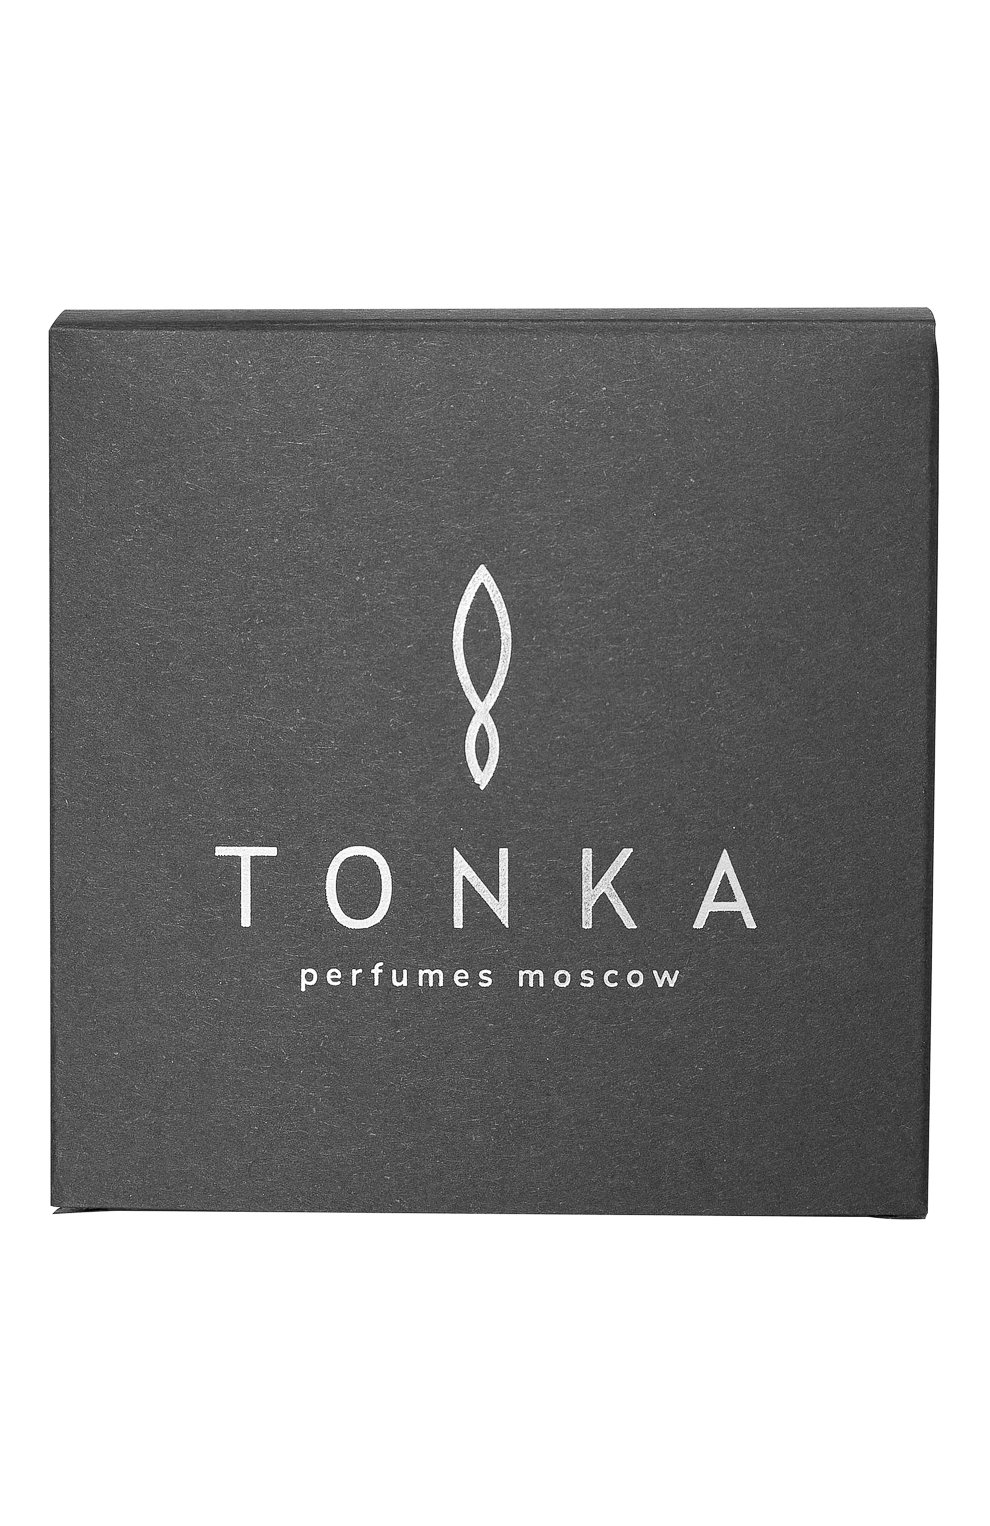 Саше для дома tonka TONKA PERFUMES MOSCOW бесцветного цвета, арт. 4665304432627 | Фото 2